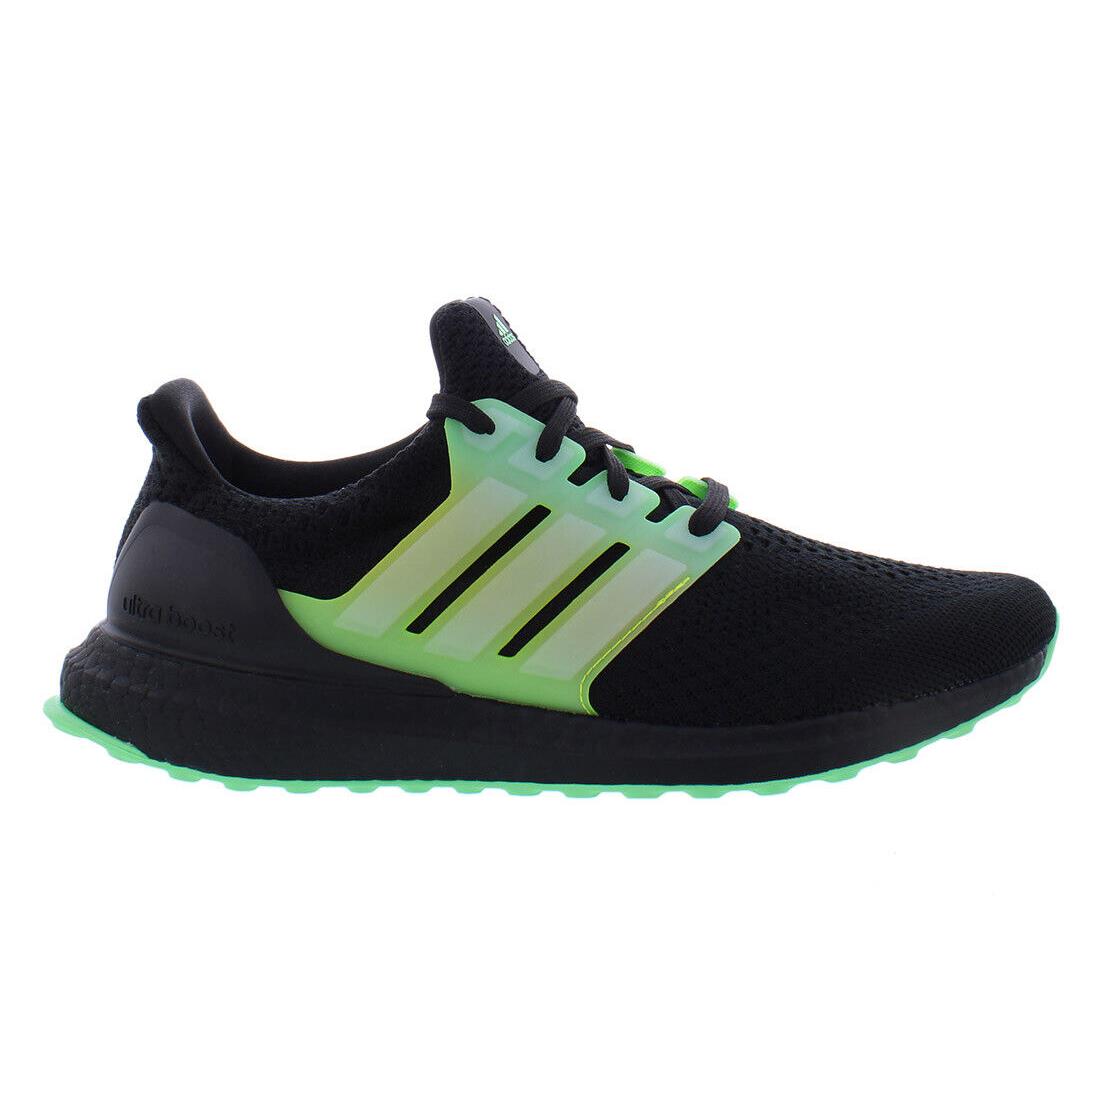 Adidas Ultraboost 5.0 Dna Mens Shoes - Black/Green, Main: Black